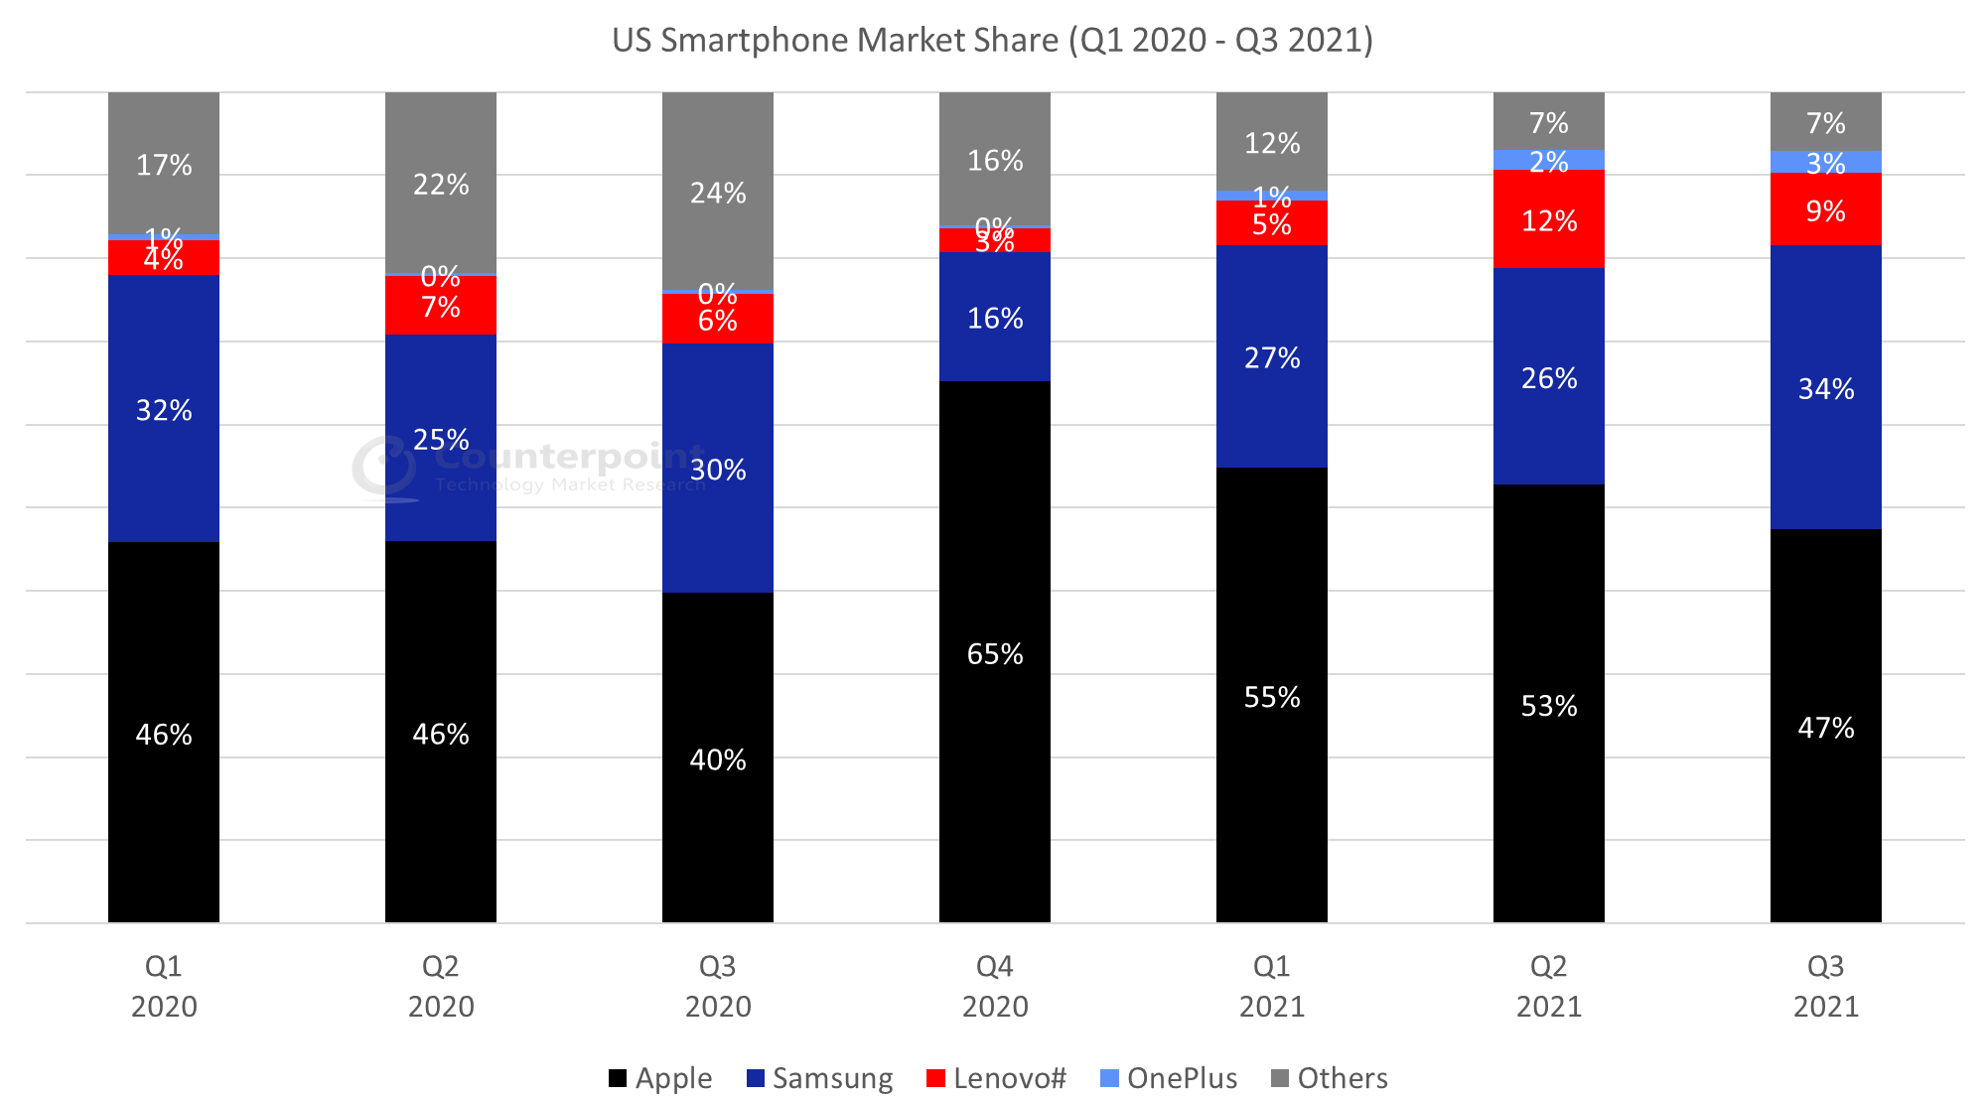 US Smartphone Market Share Q3 2021